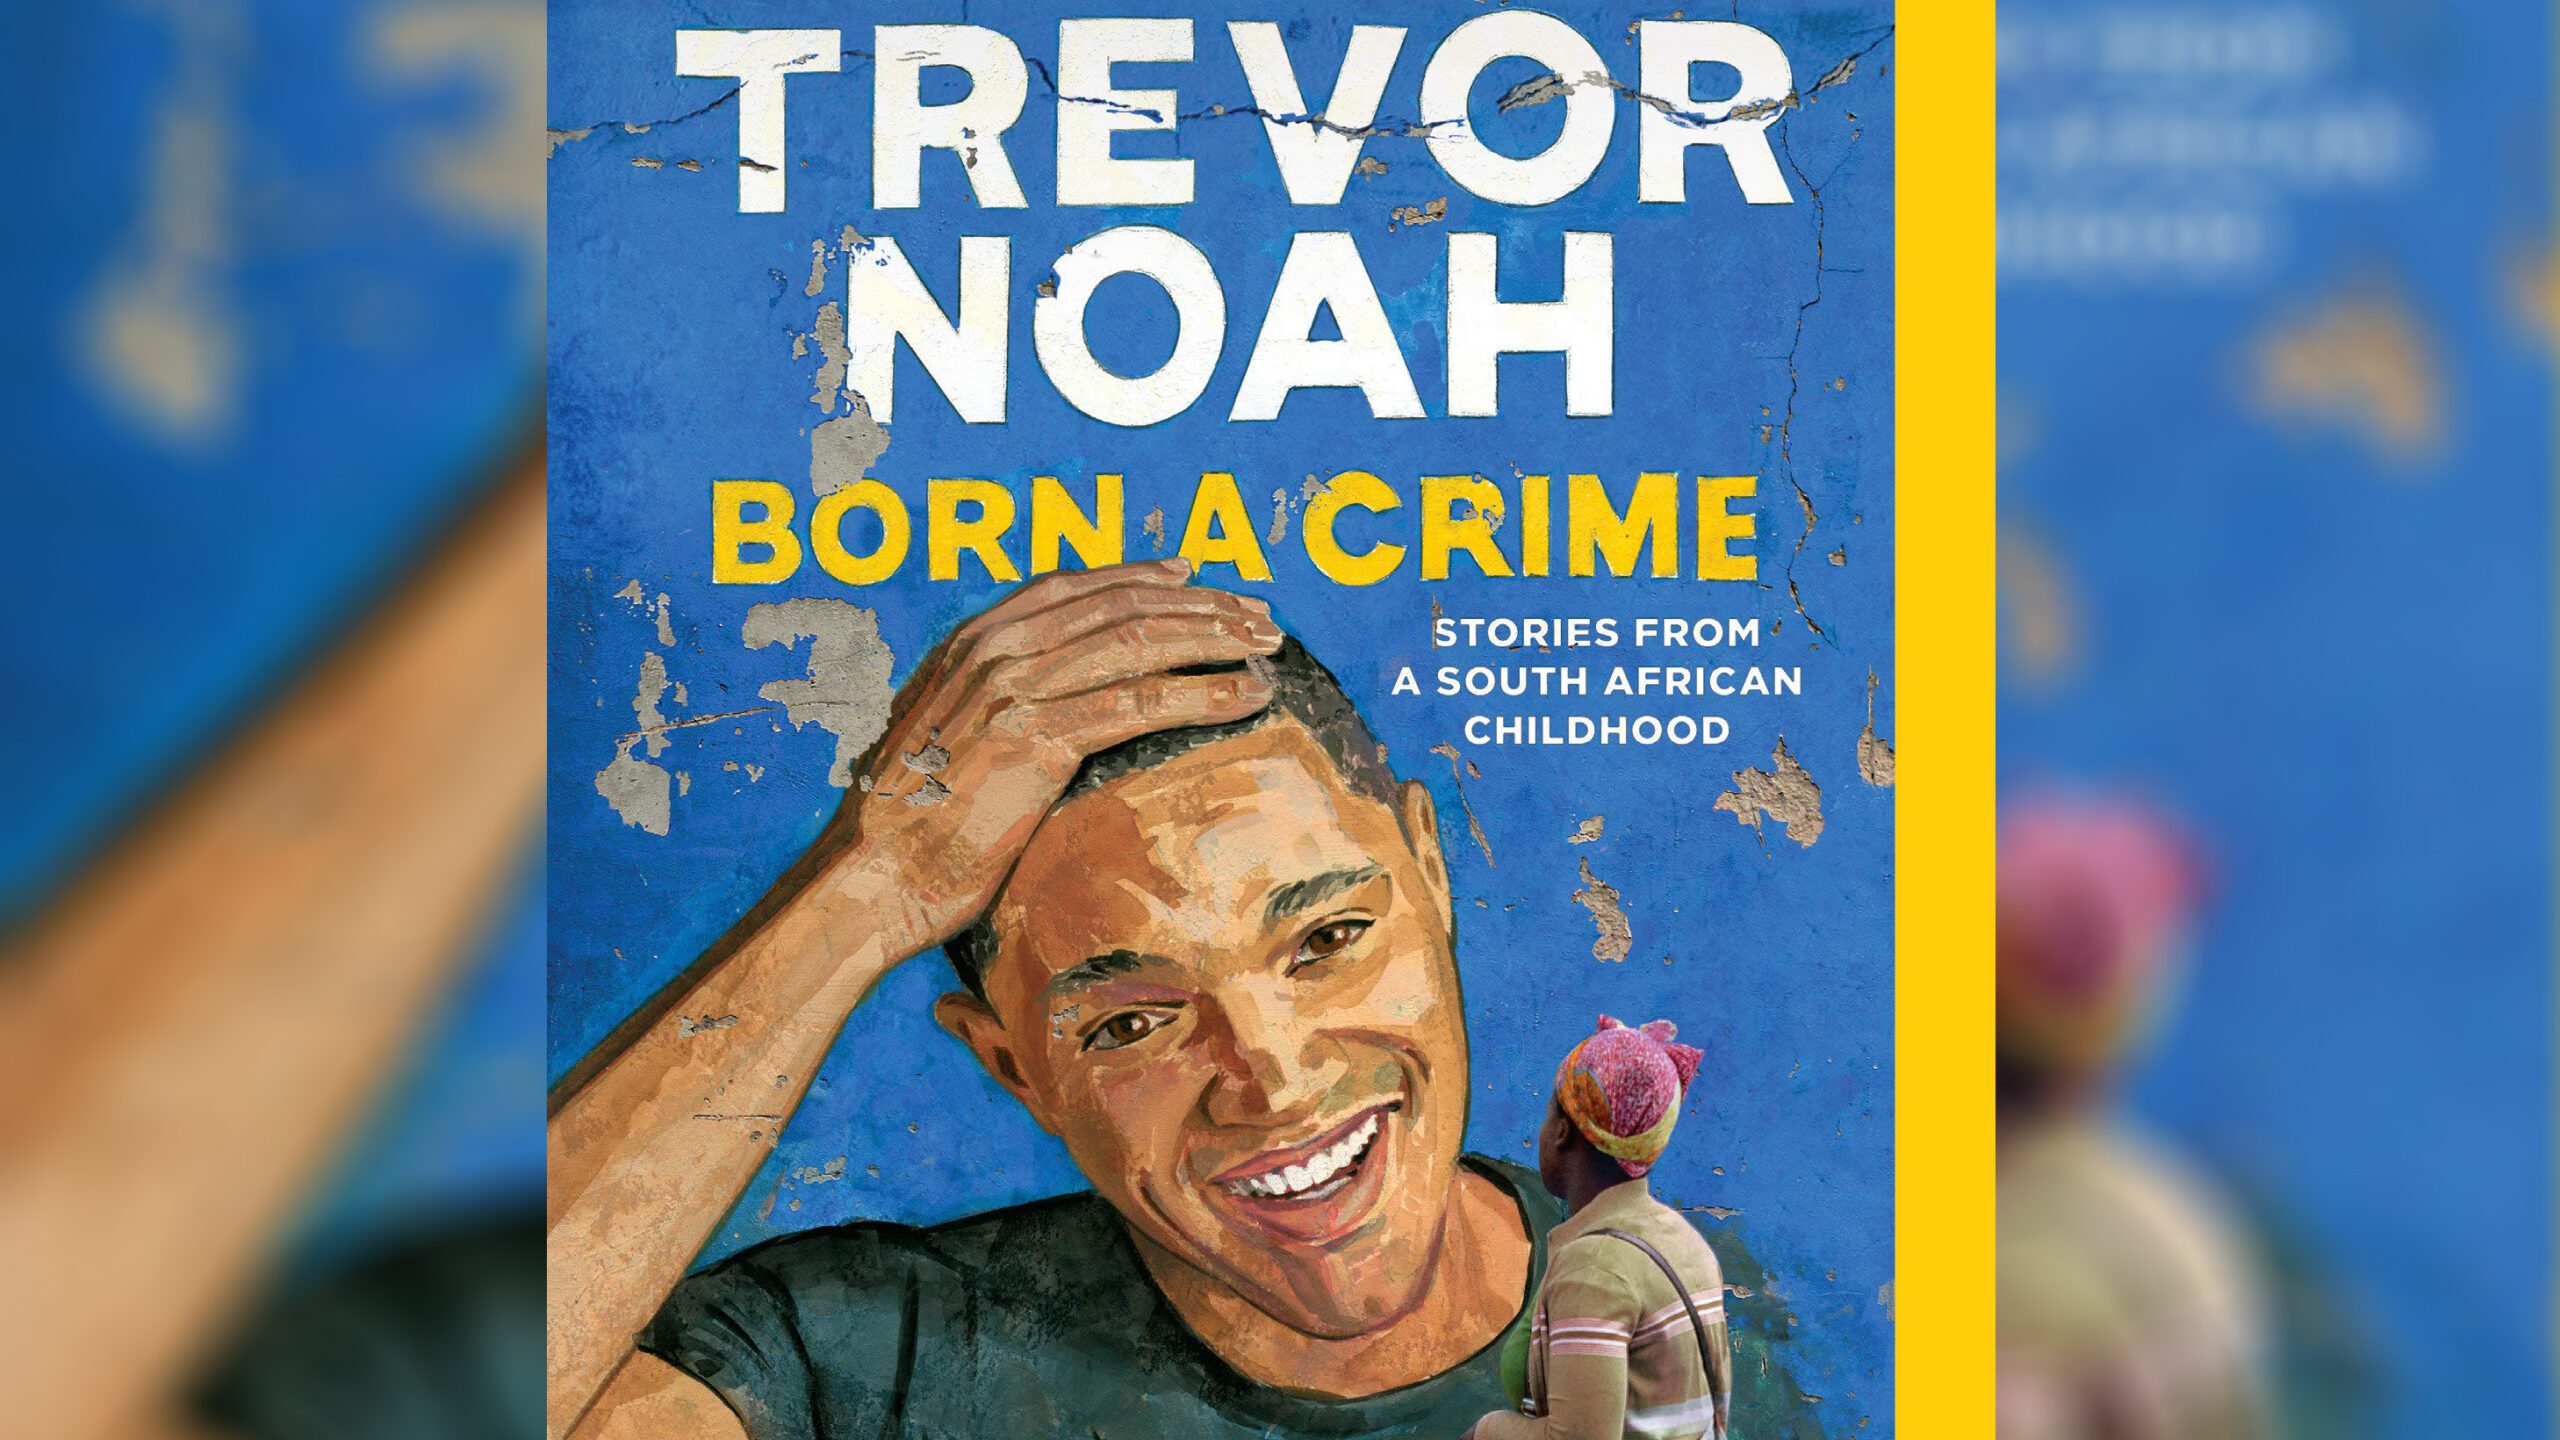 cover art of trevor noah's book